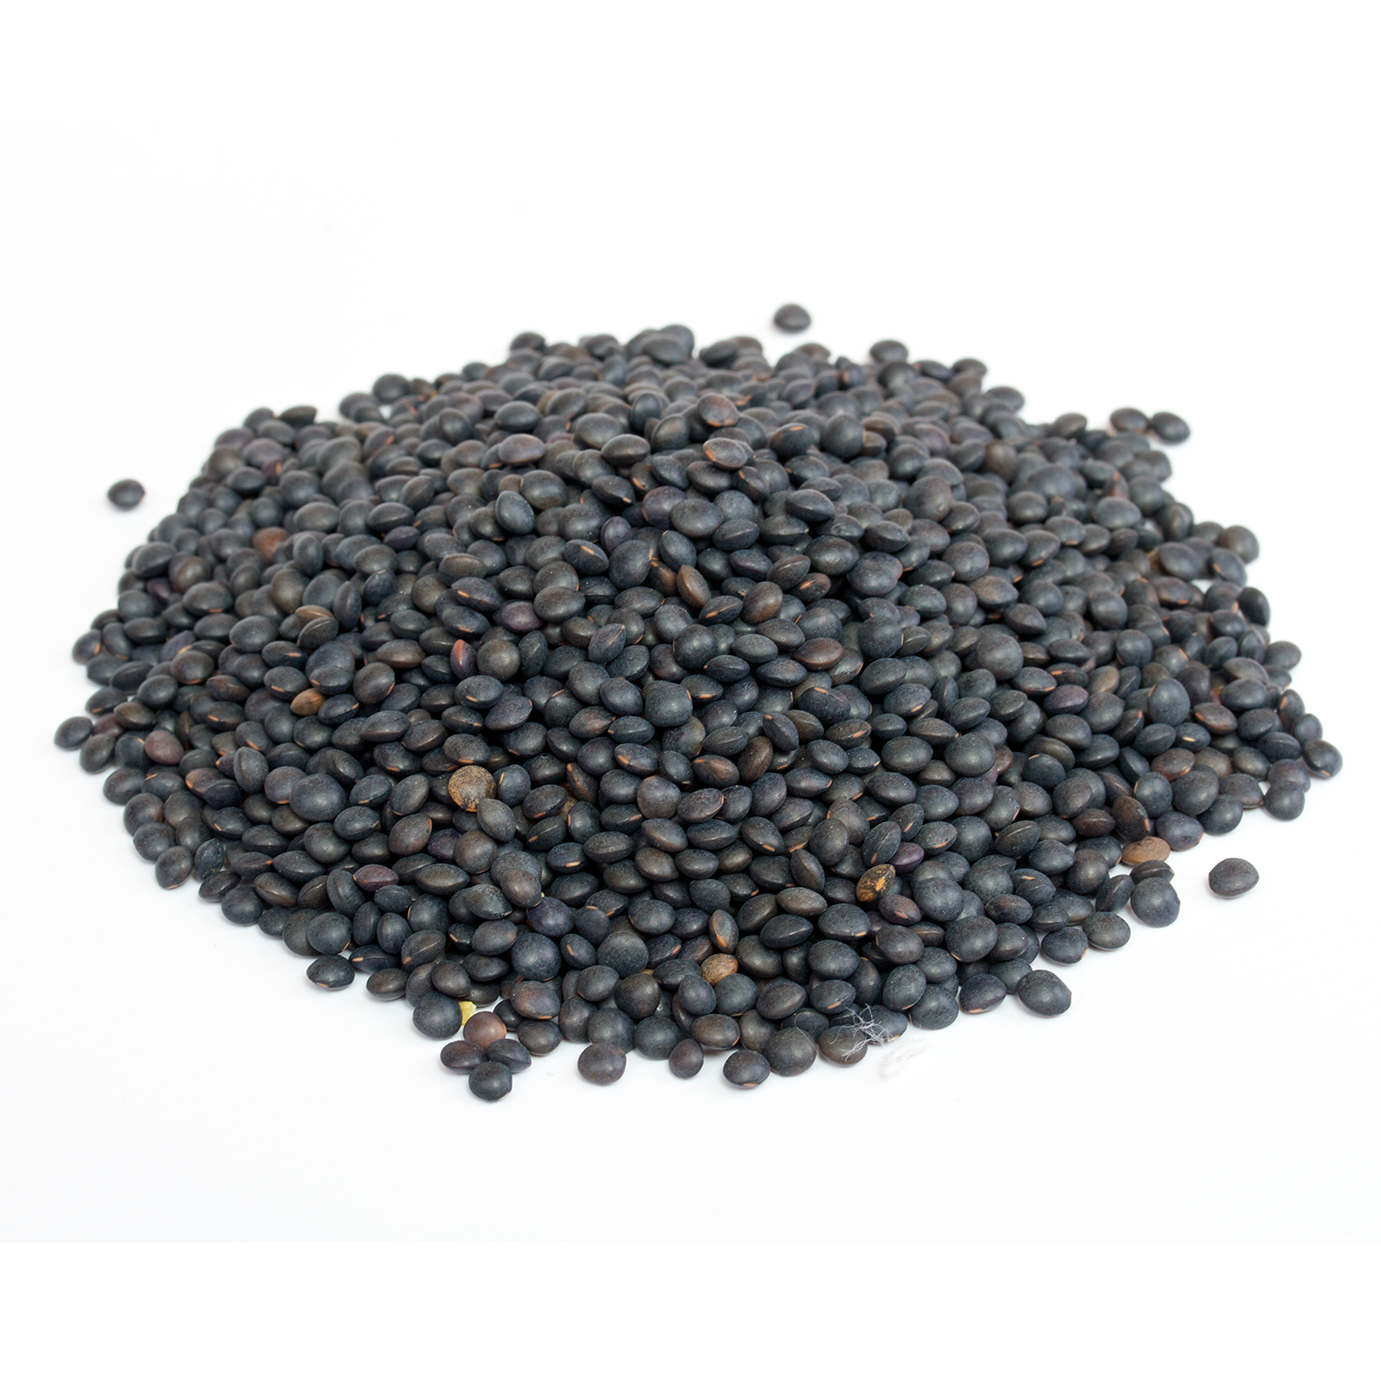 Black Lentils (Urid Beans)